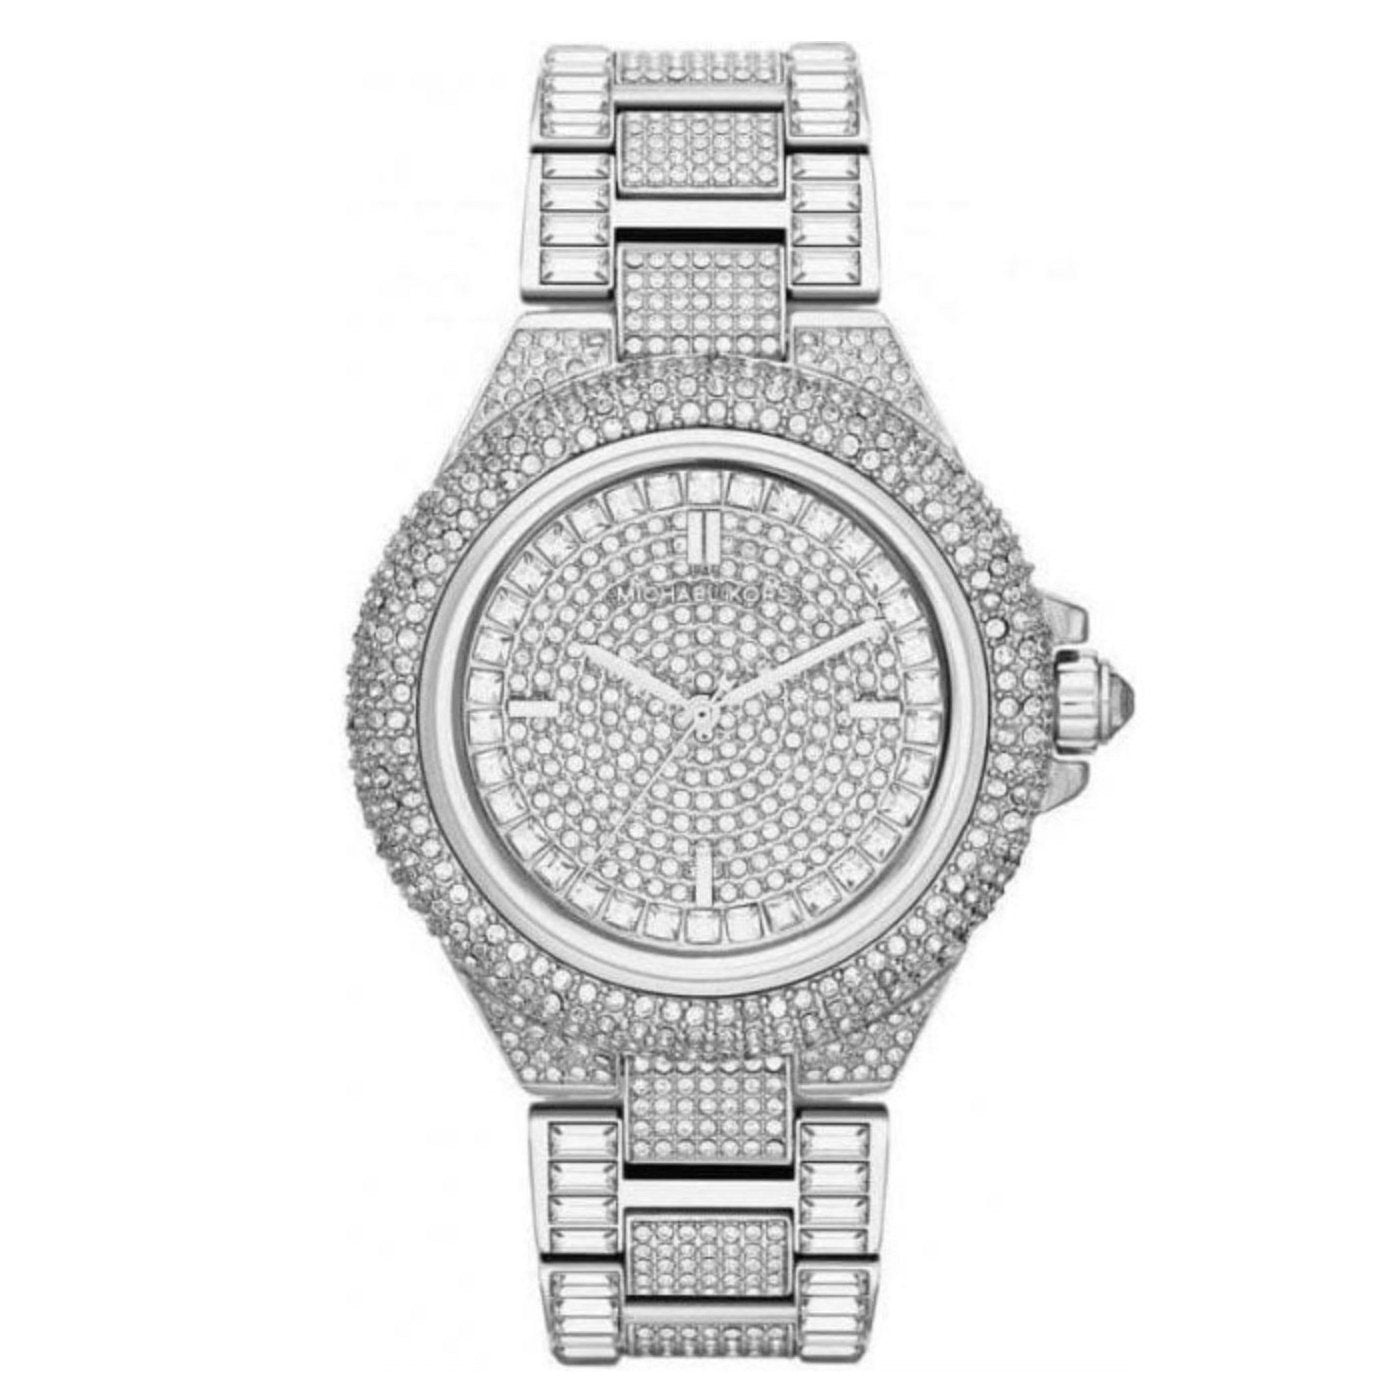 Michael Kors Ladies Watch Silver Camille Glitz MK5869 - Watches & Crystals